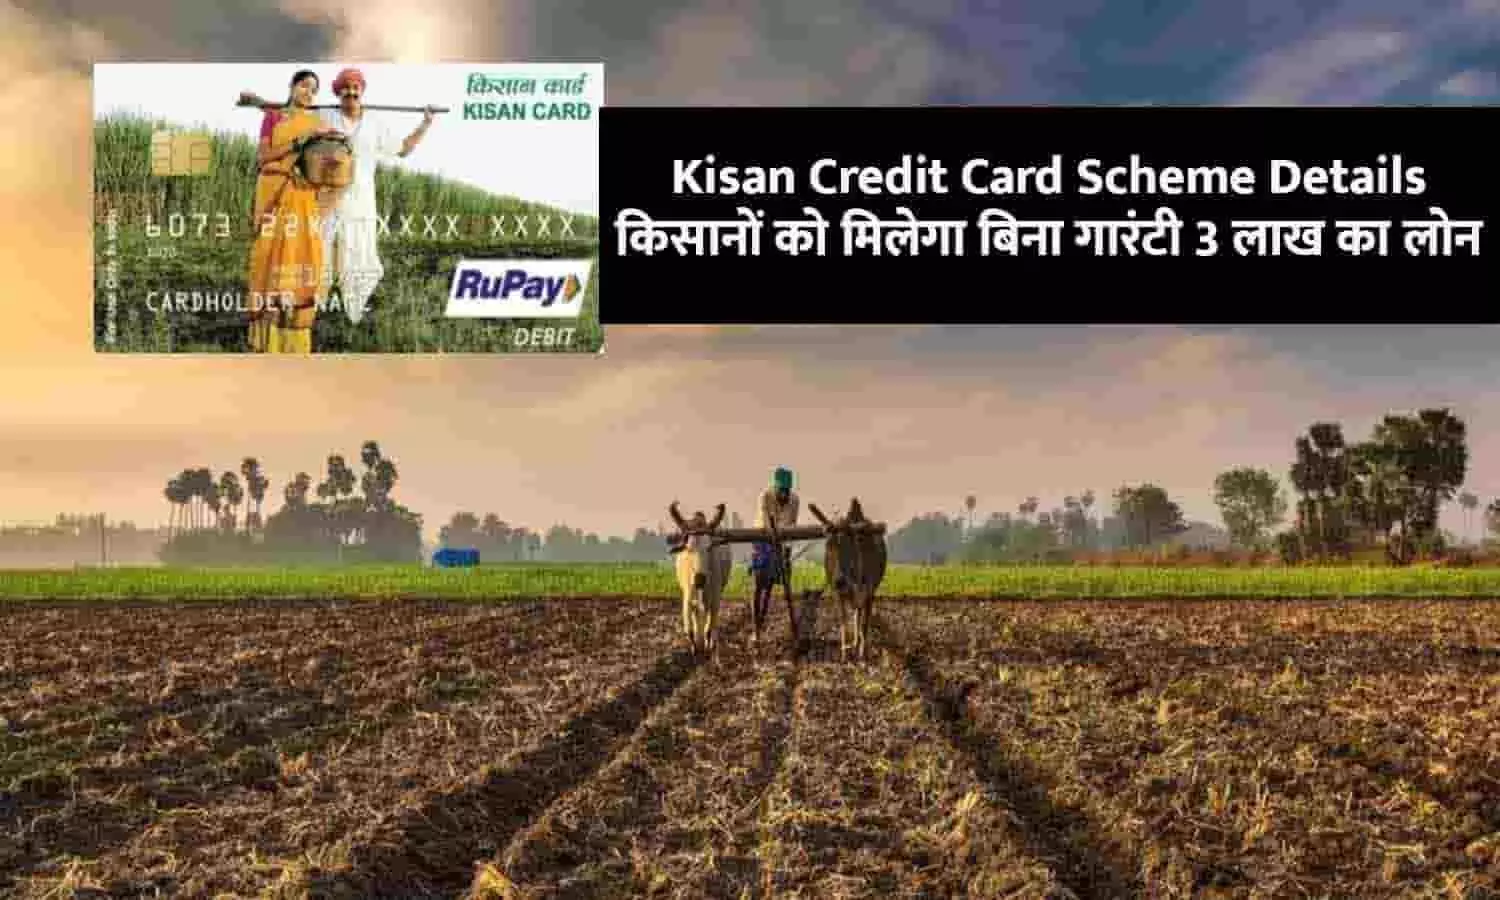 Kisan Credit Card Scheme Details